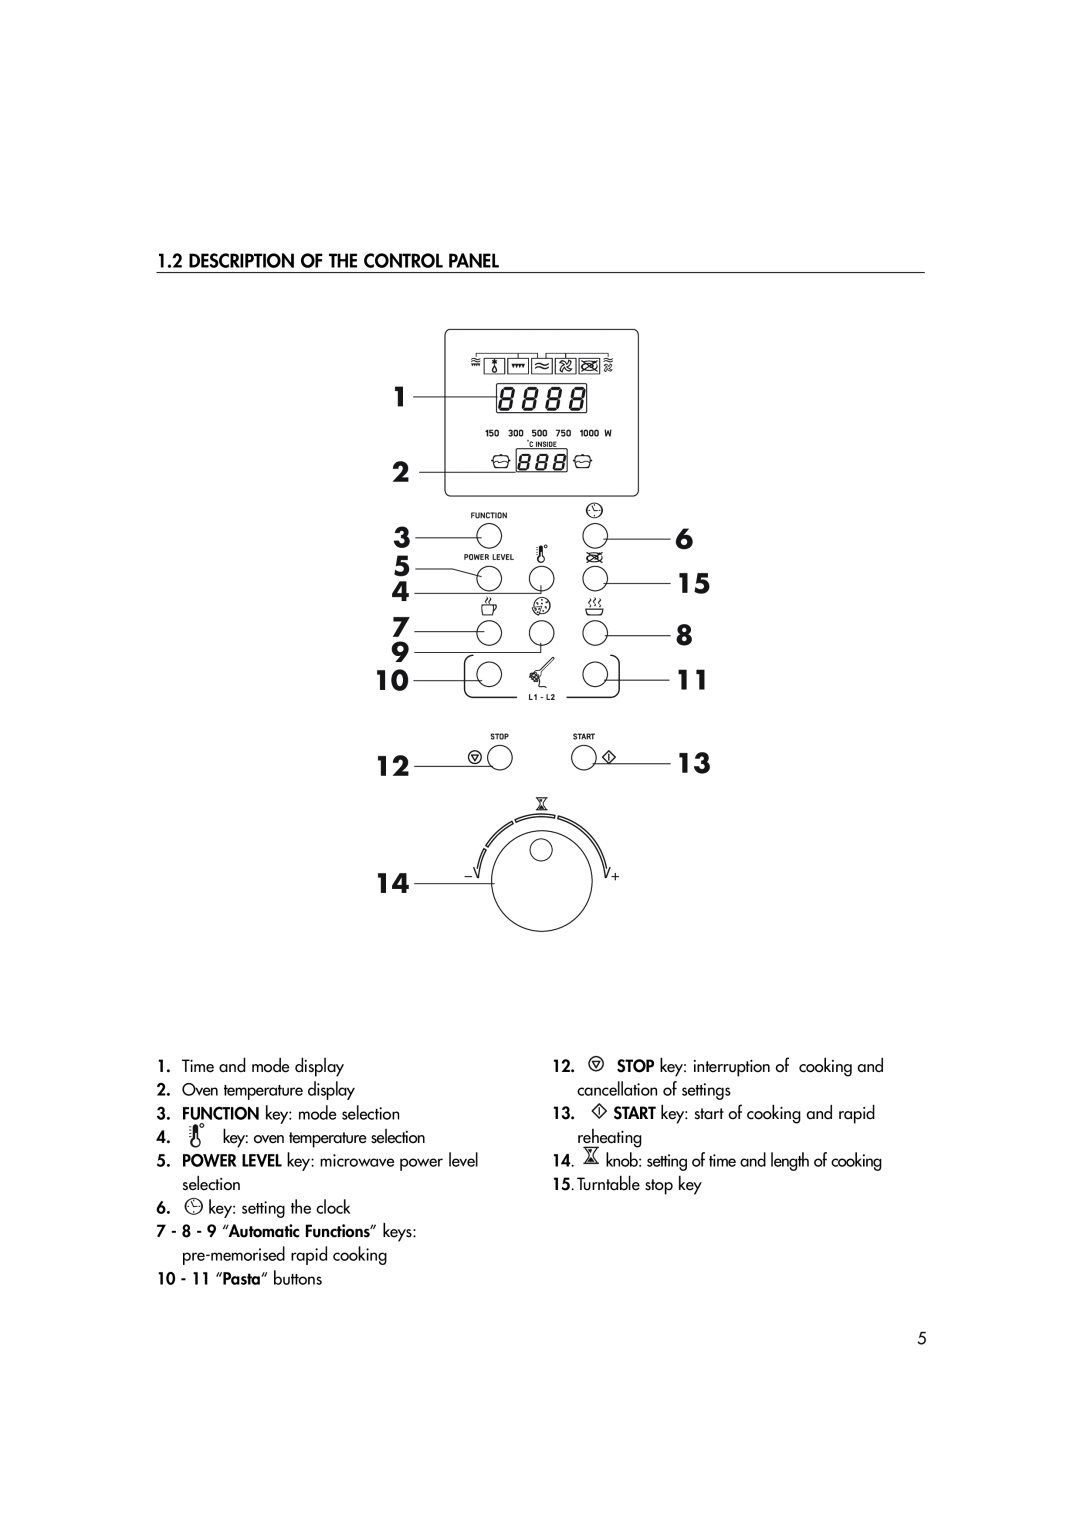 Hotpoint MWHZ33 manual 1 2, Description Of The Control Panel 